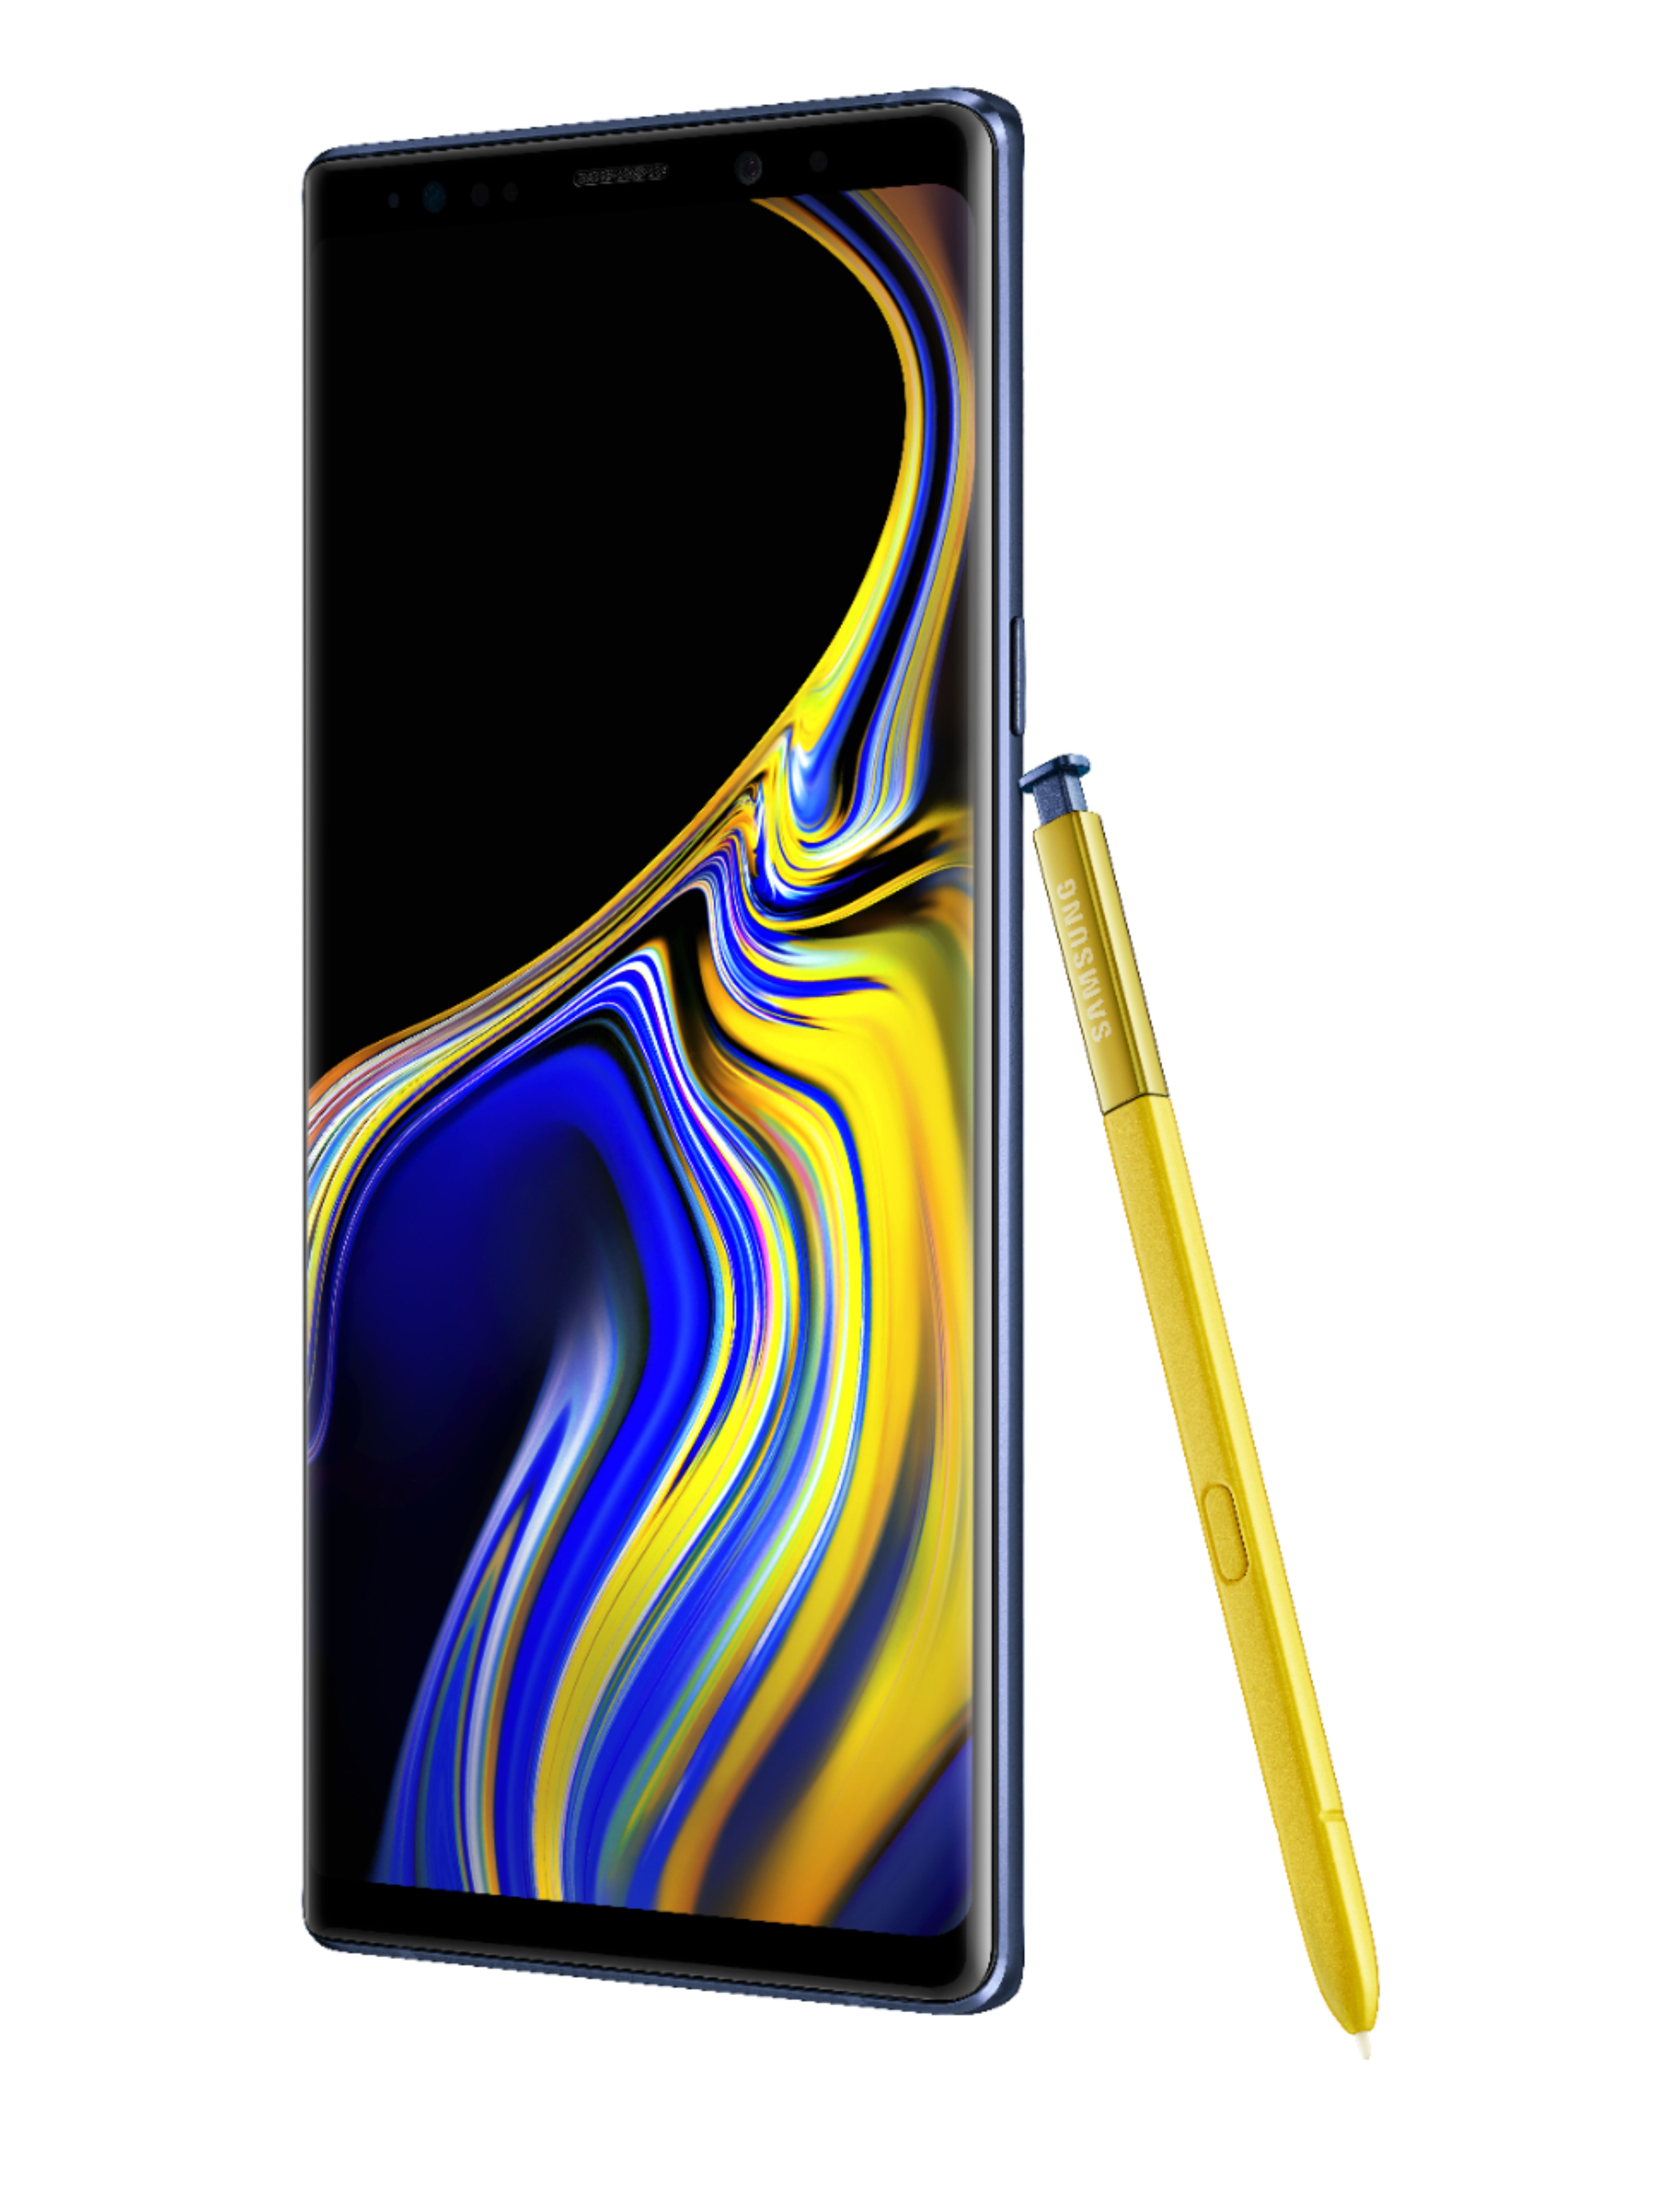 Samsung Galaxy Note9 128GB Ocean Blue (Sprint - Best Buy